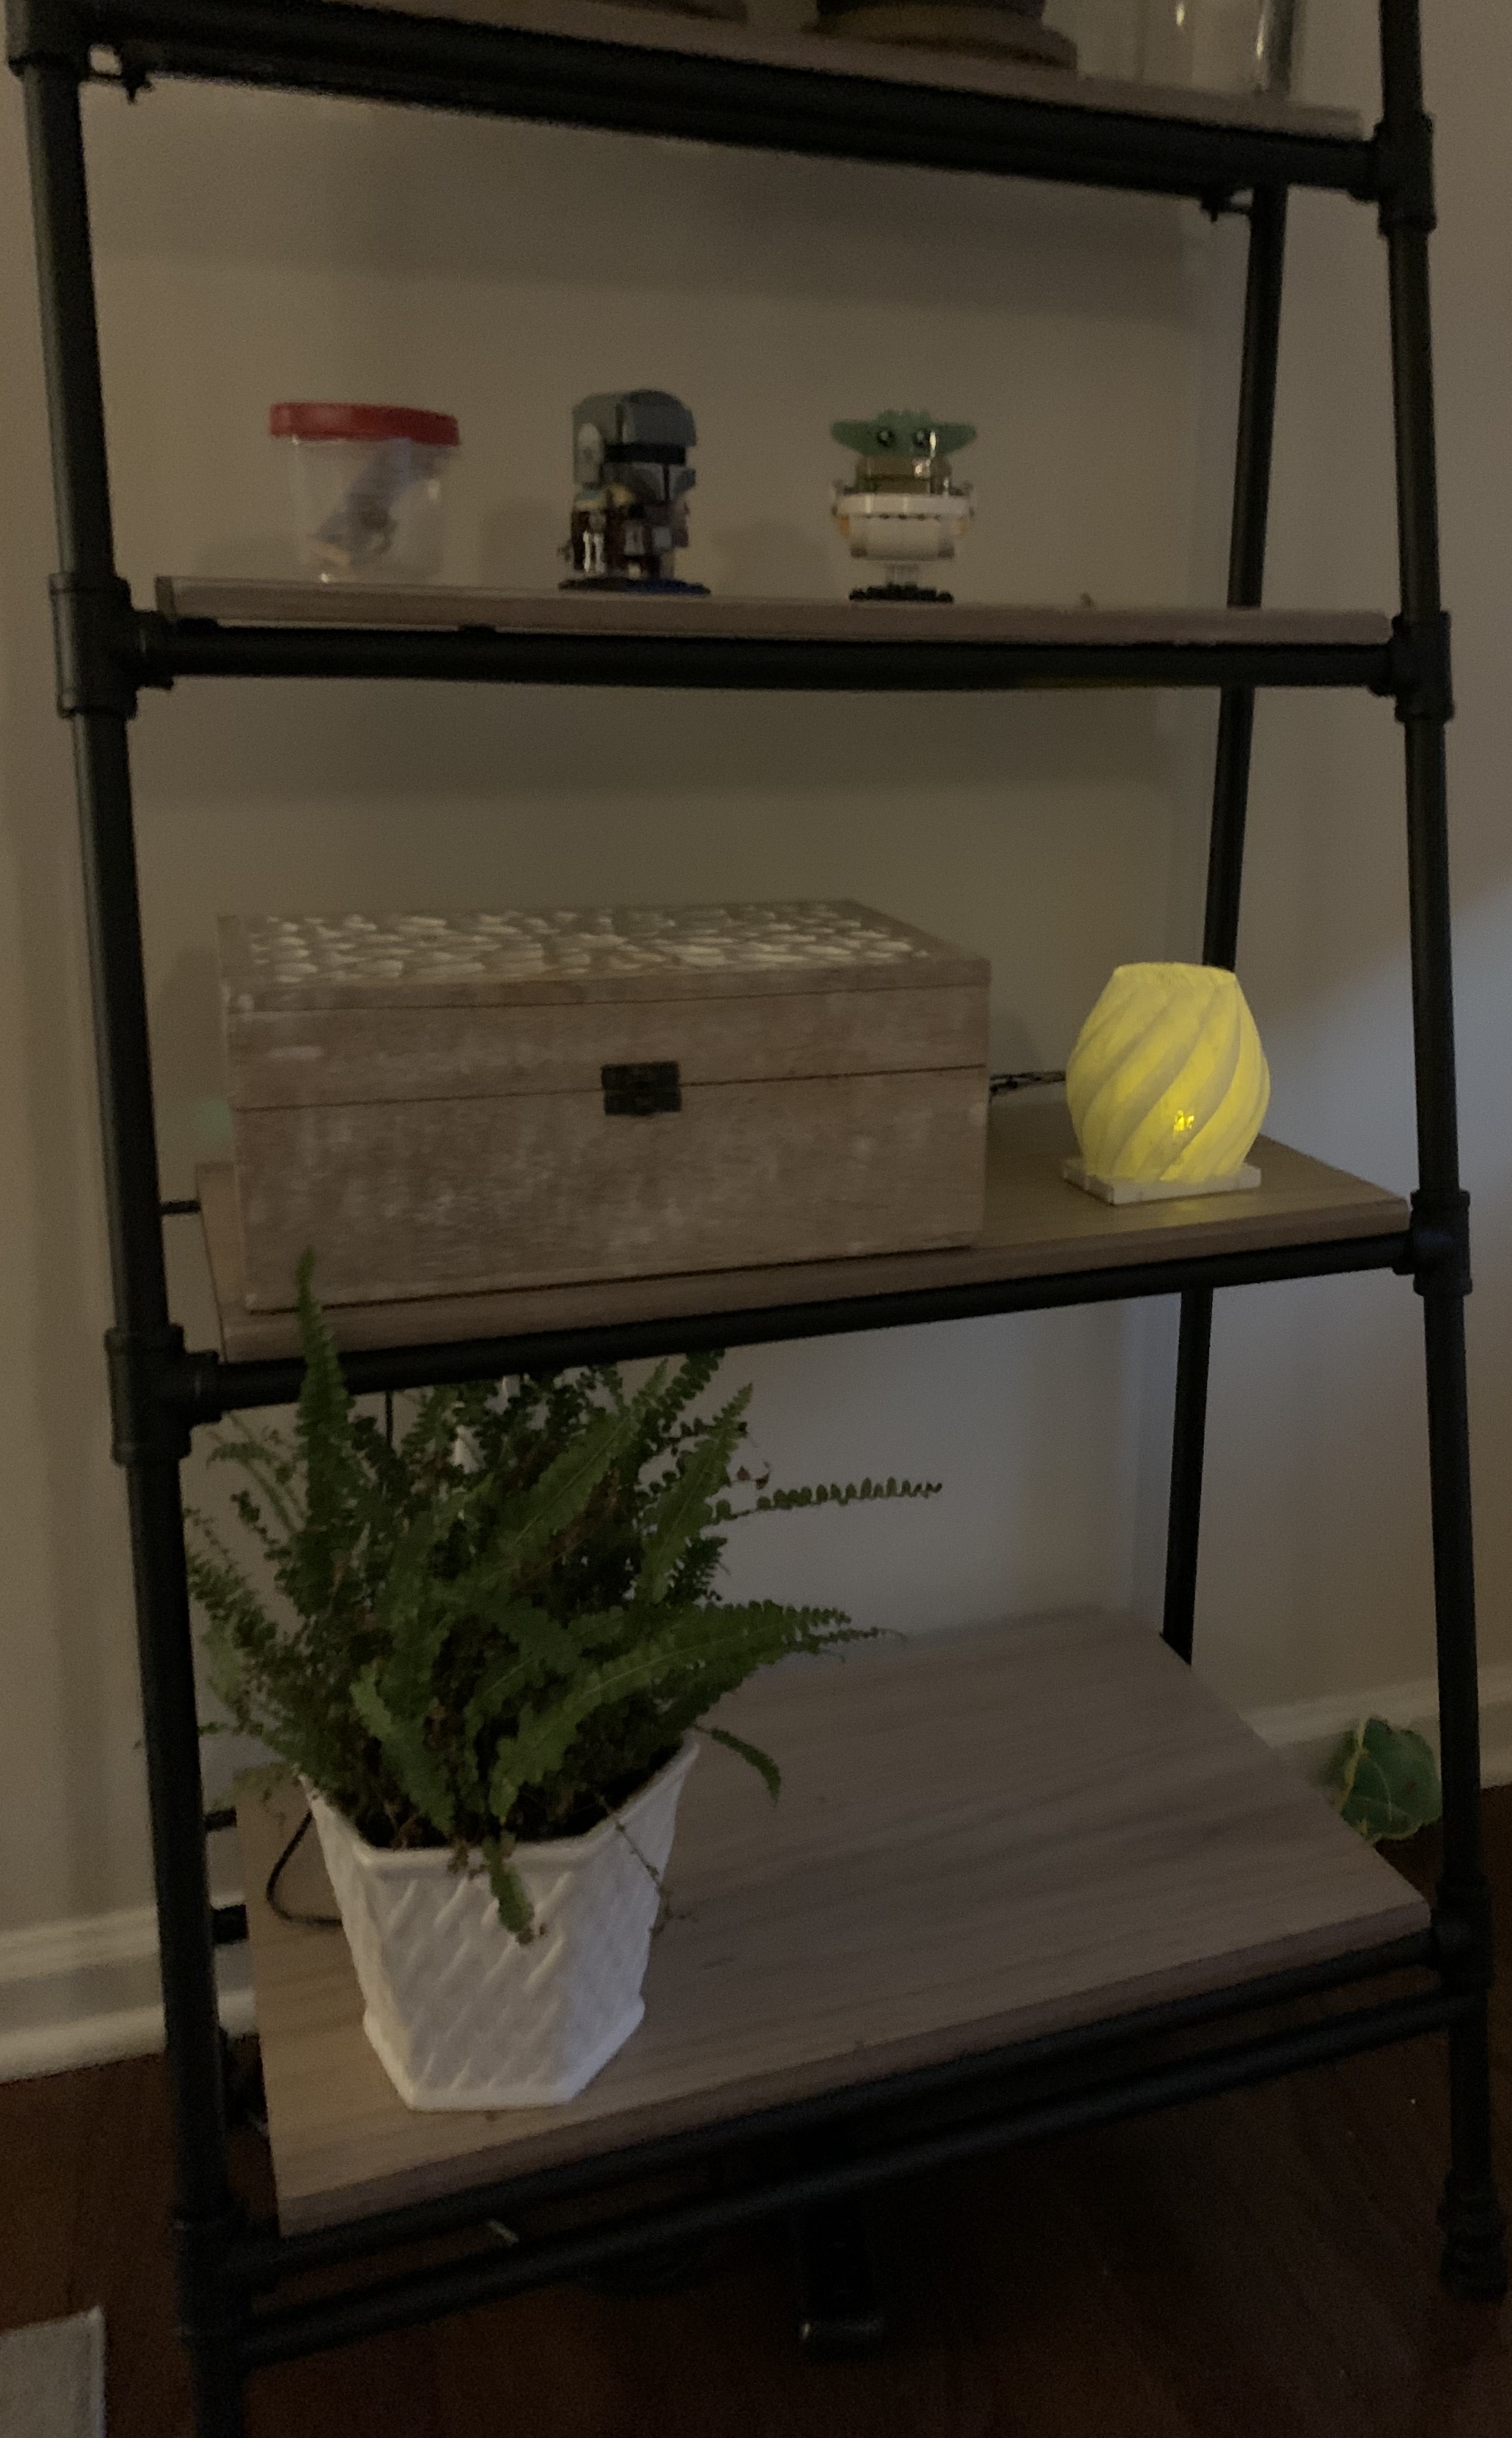 Weather Lamp and Raspberry Pi on shelf